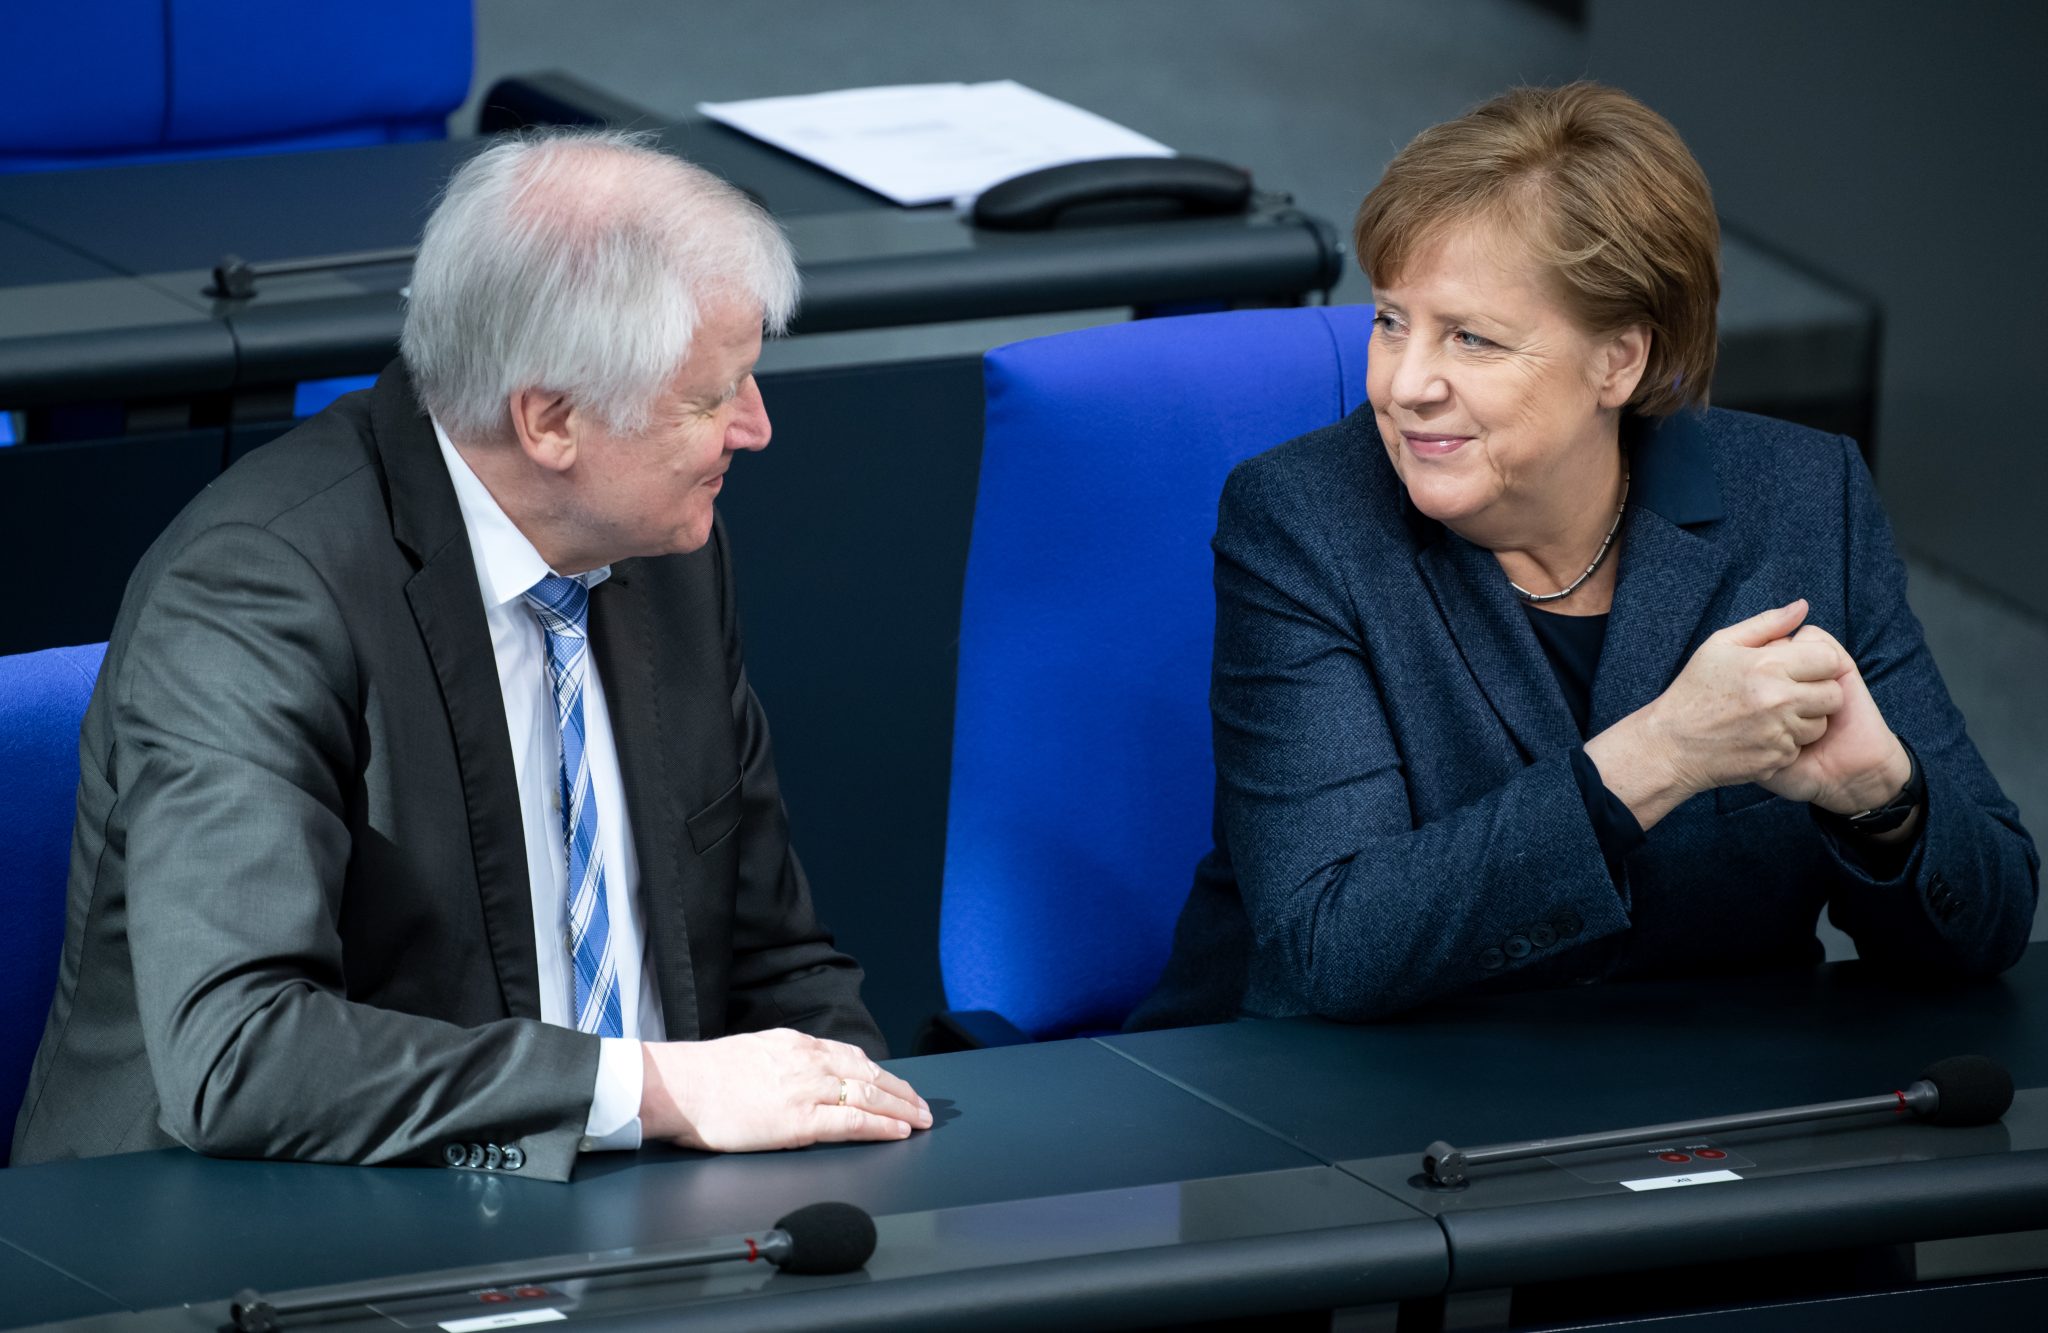 Horst Seehofer (CSU) und Angela Merkel (CDU)